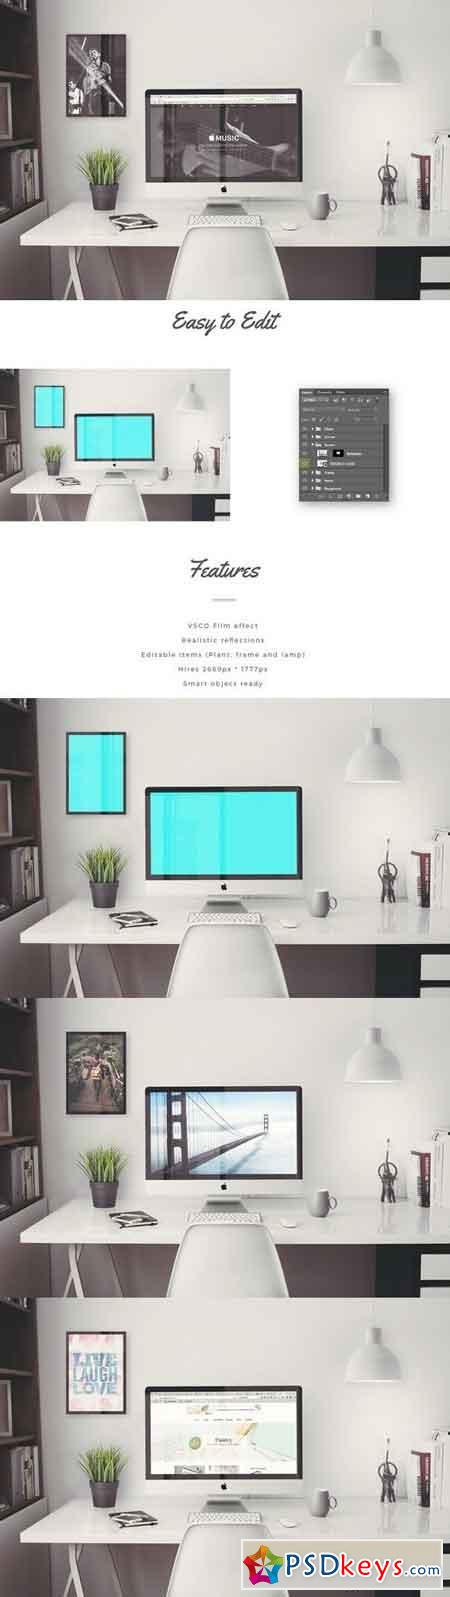 iMac 5k Retina 27-Inch Home Office Mockup